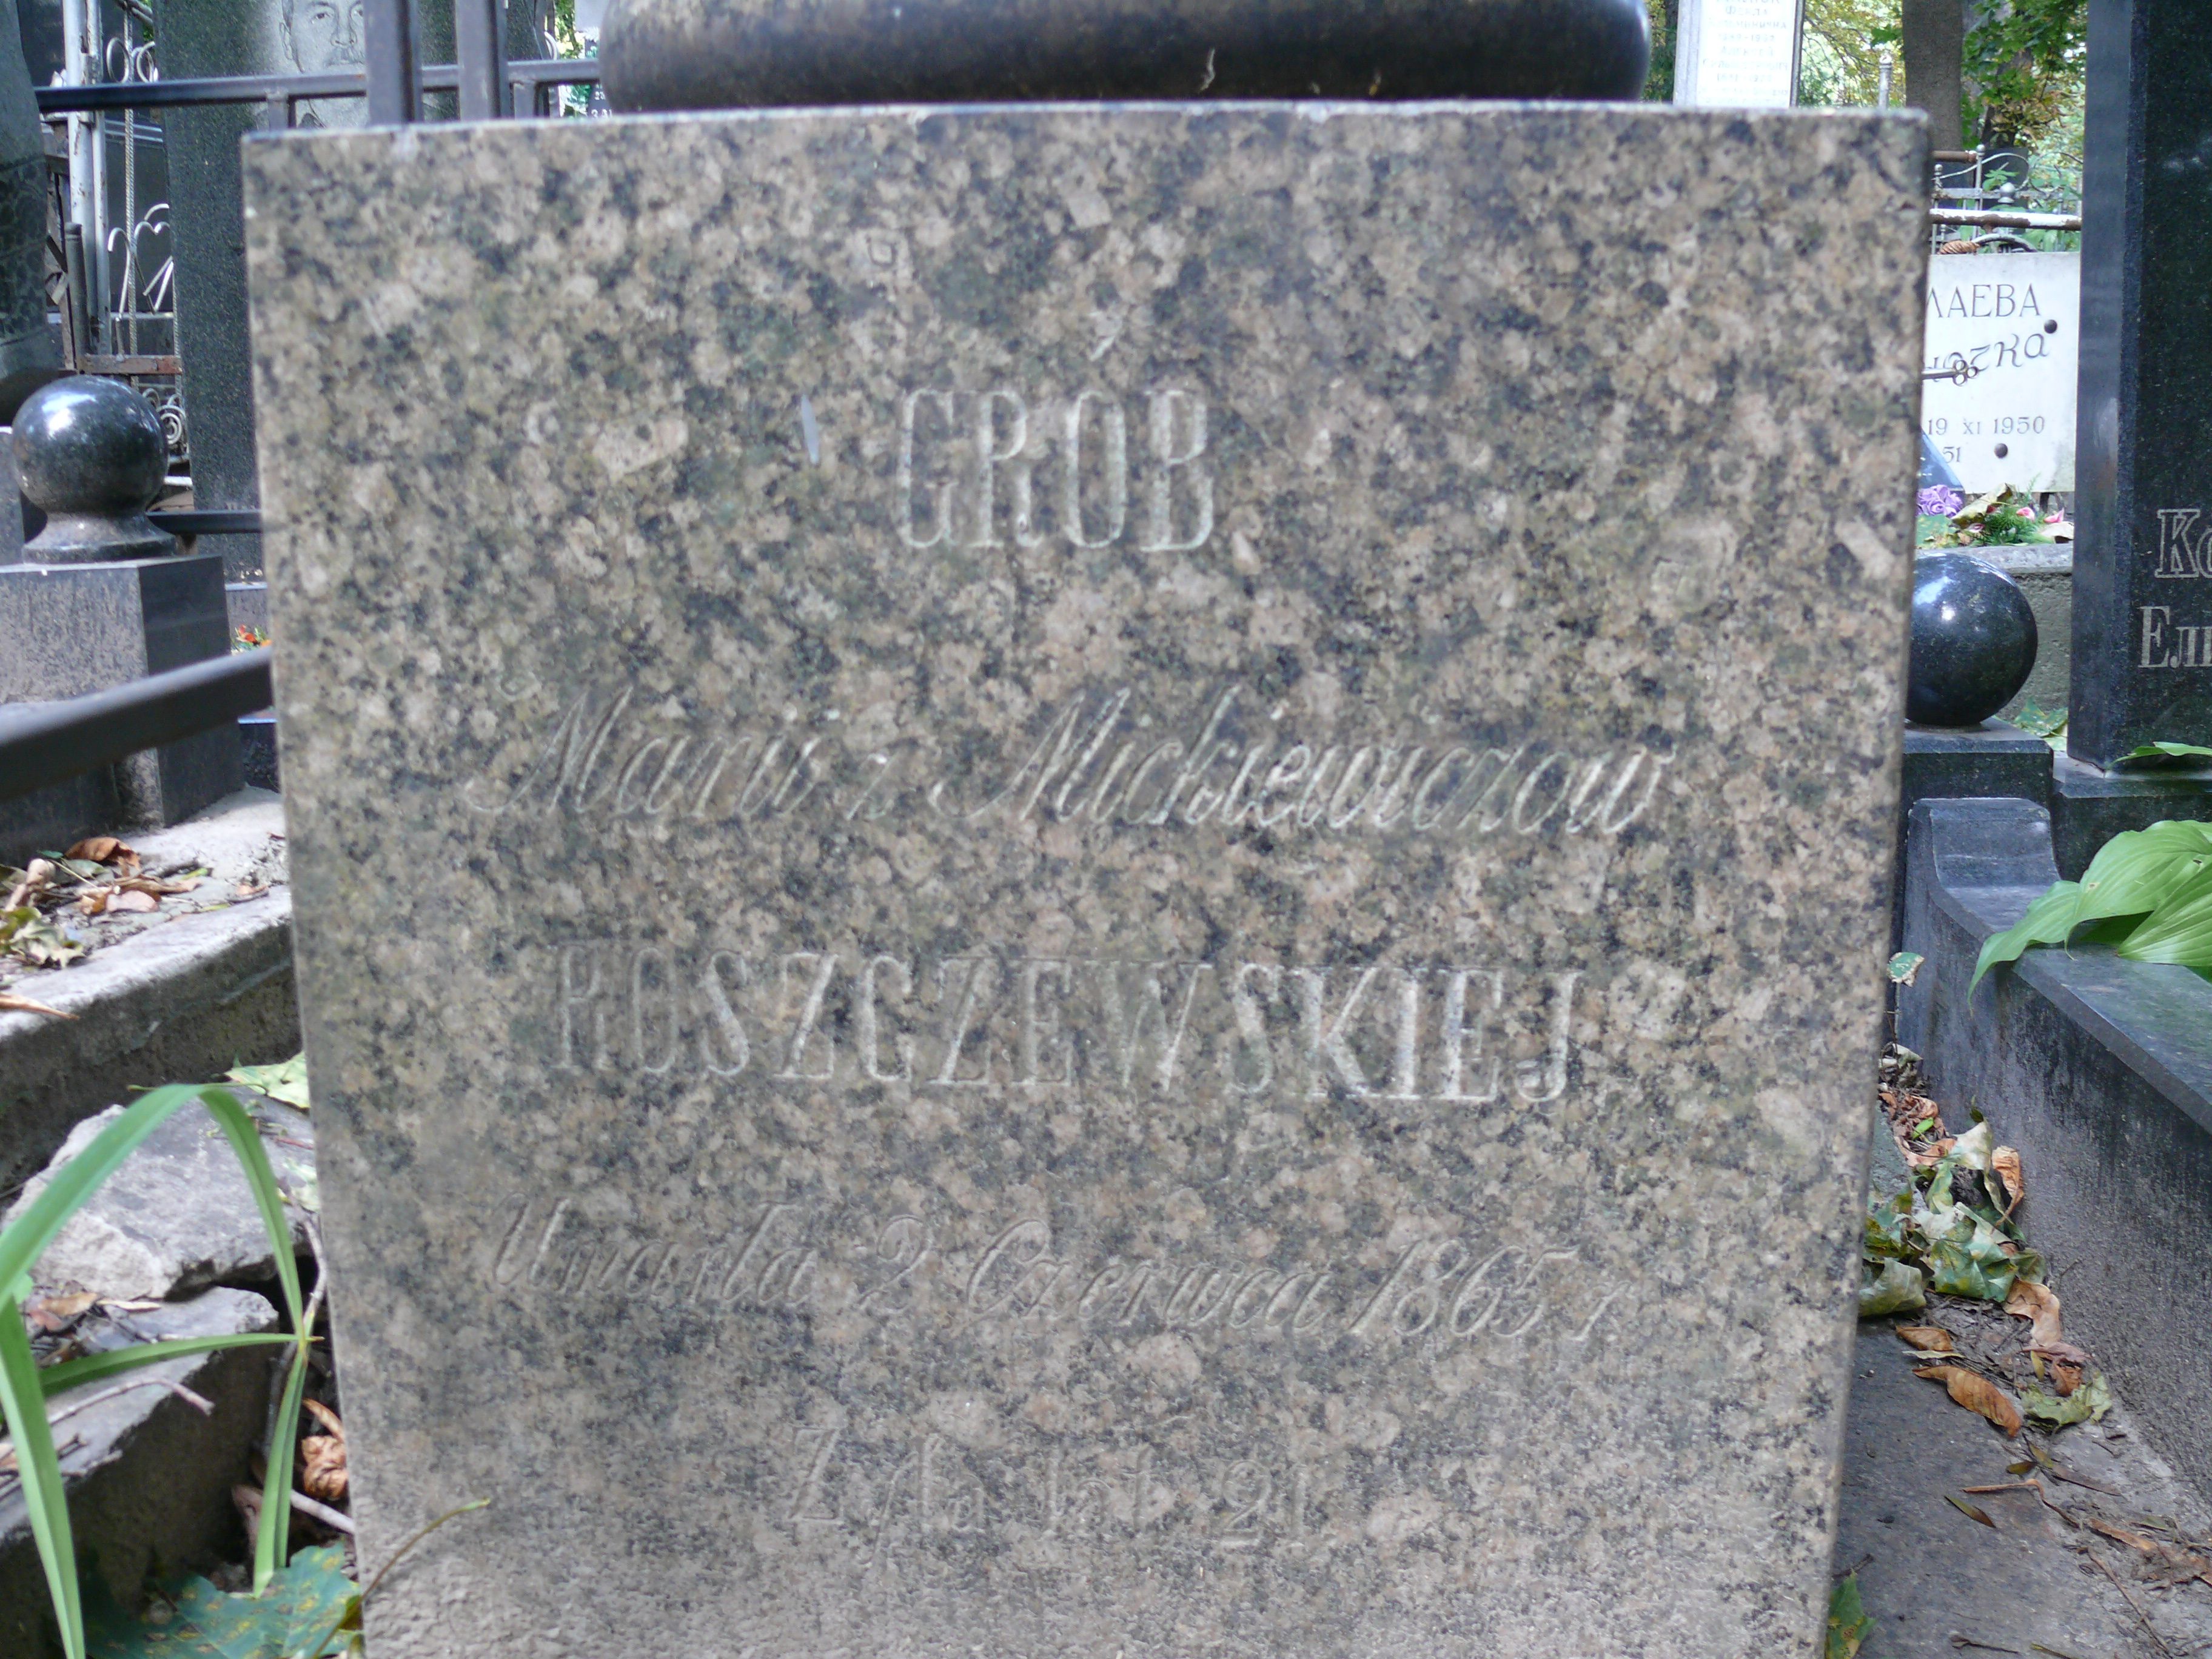 Inscription from the tombstone of Maria Roszczewska